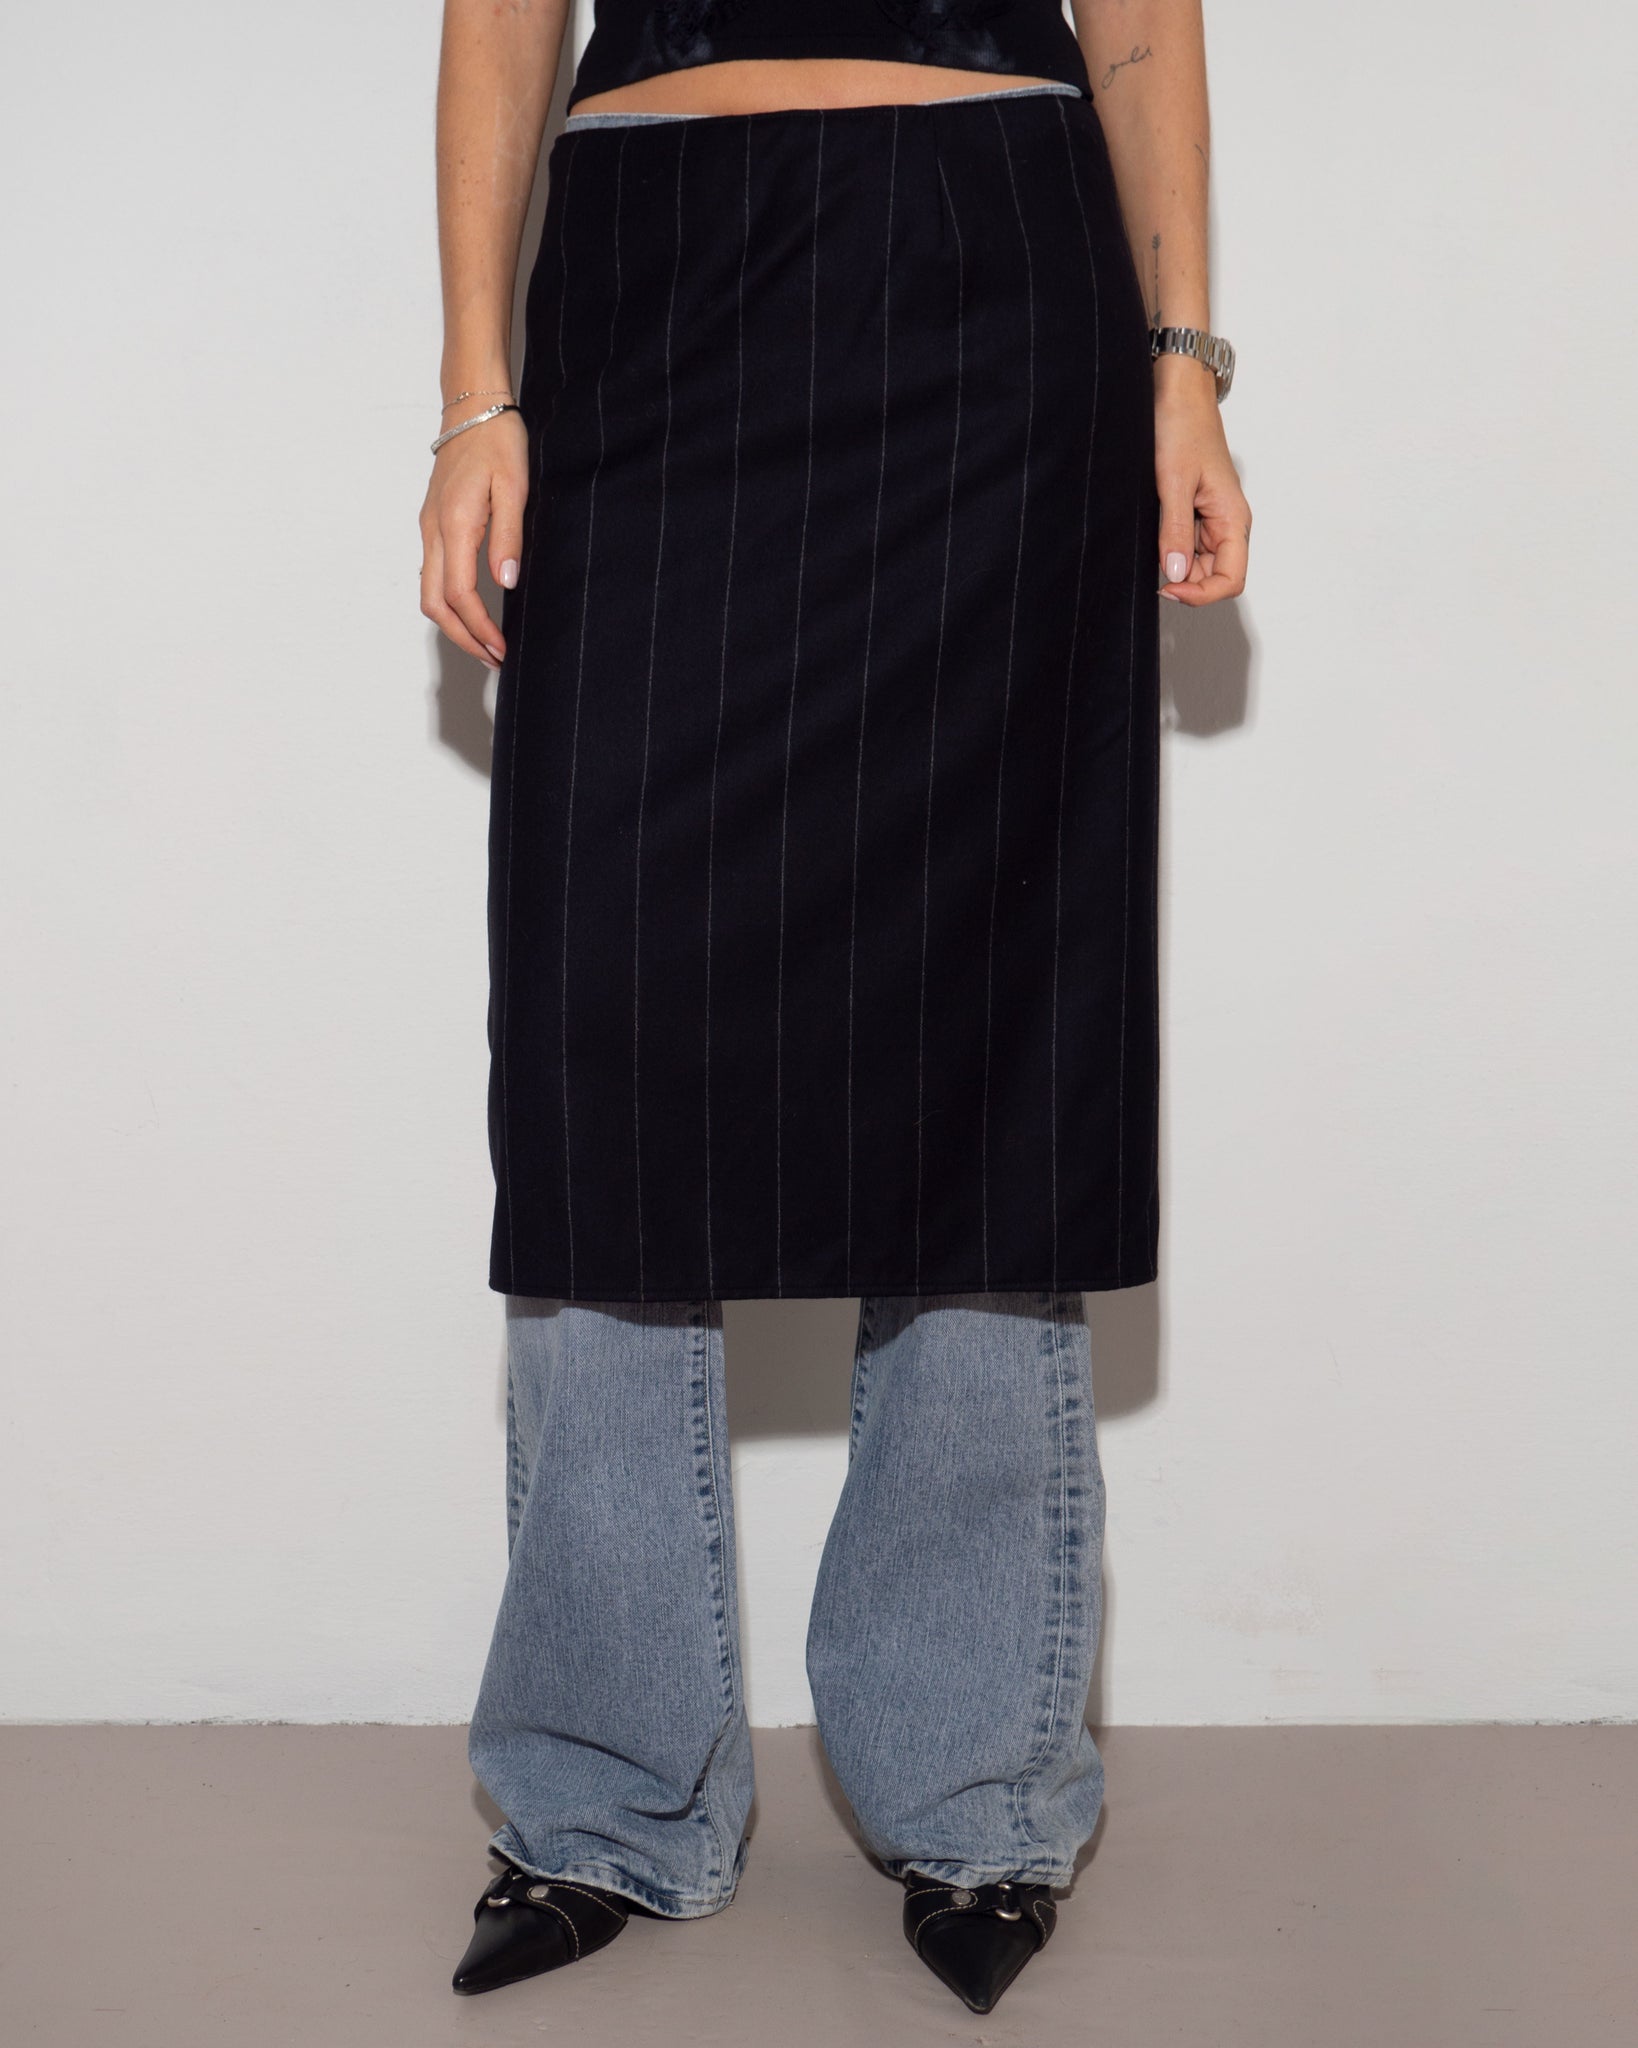 YSL Pinstripe Skirt